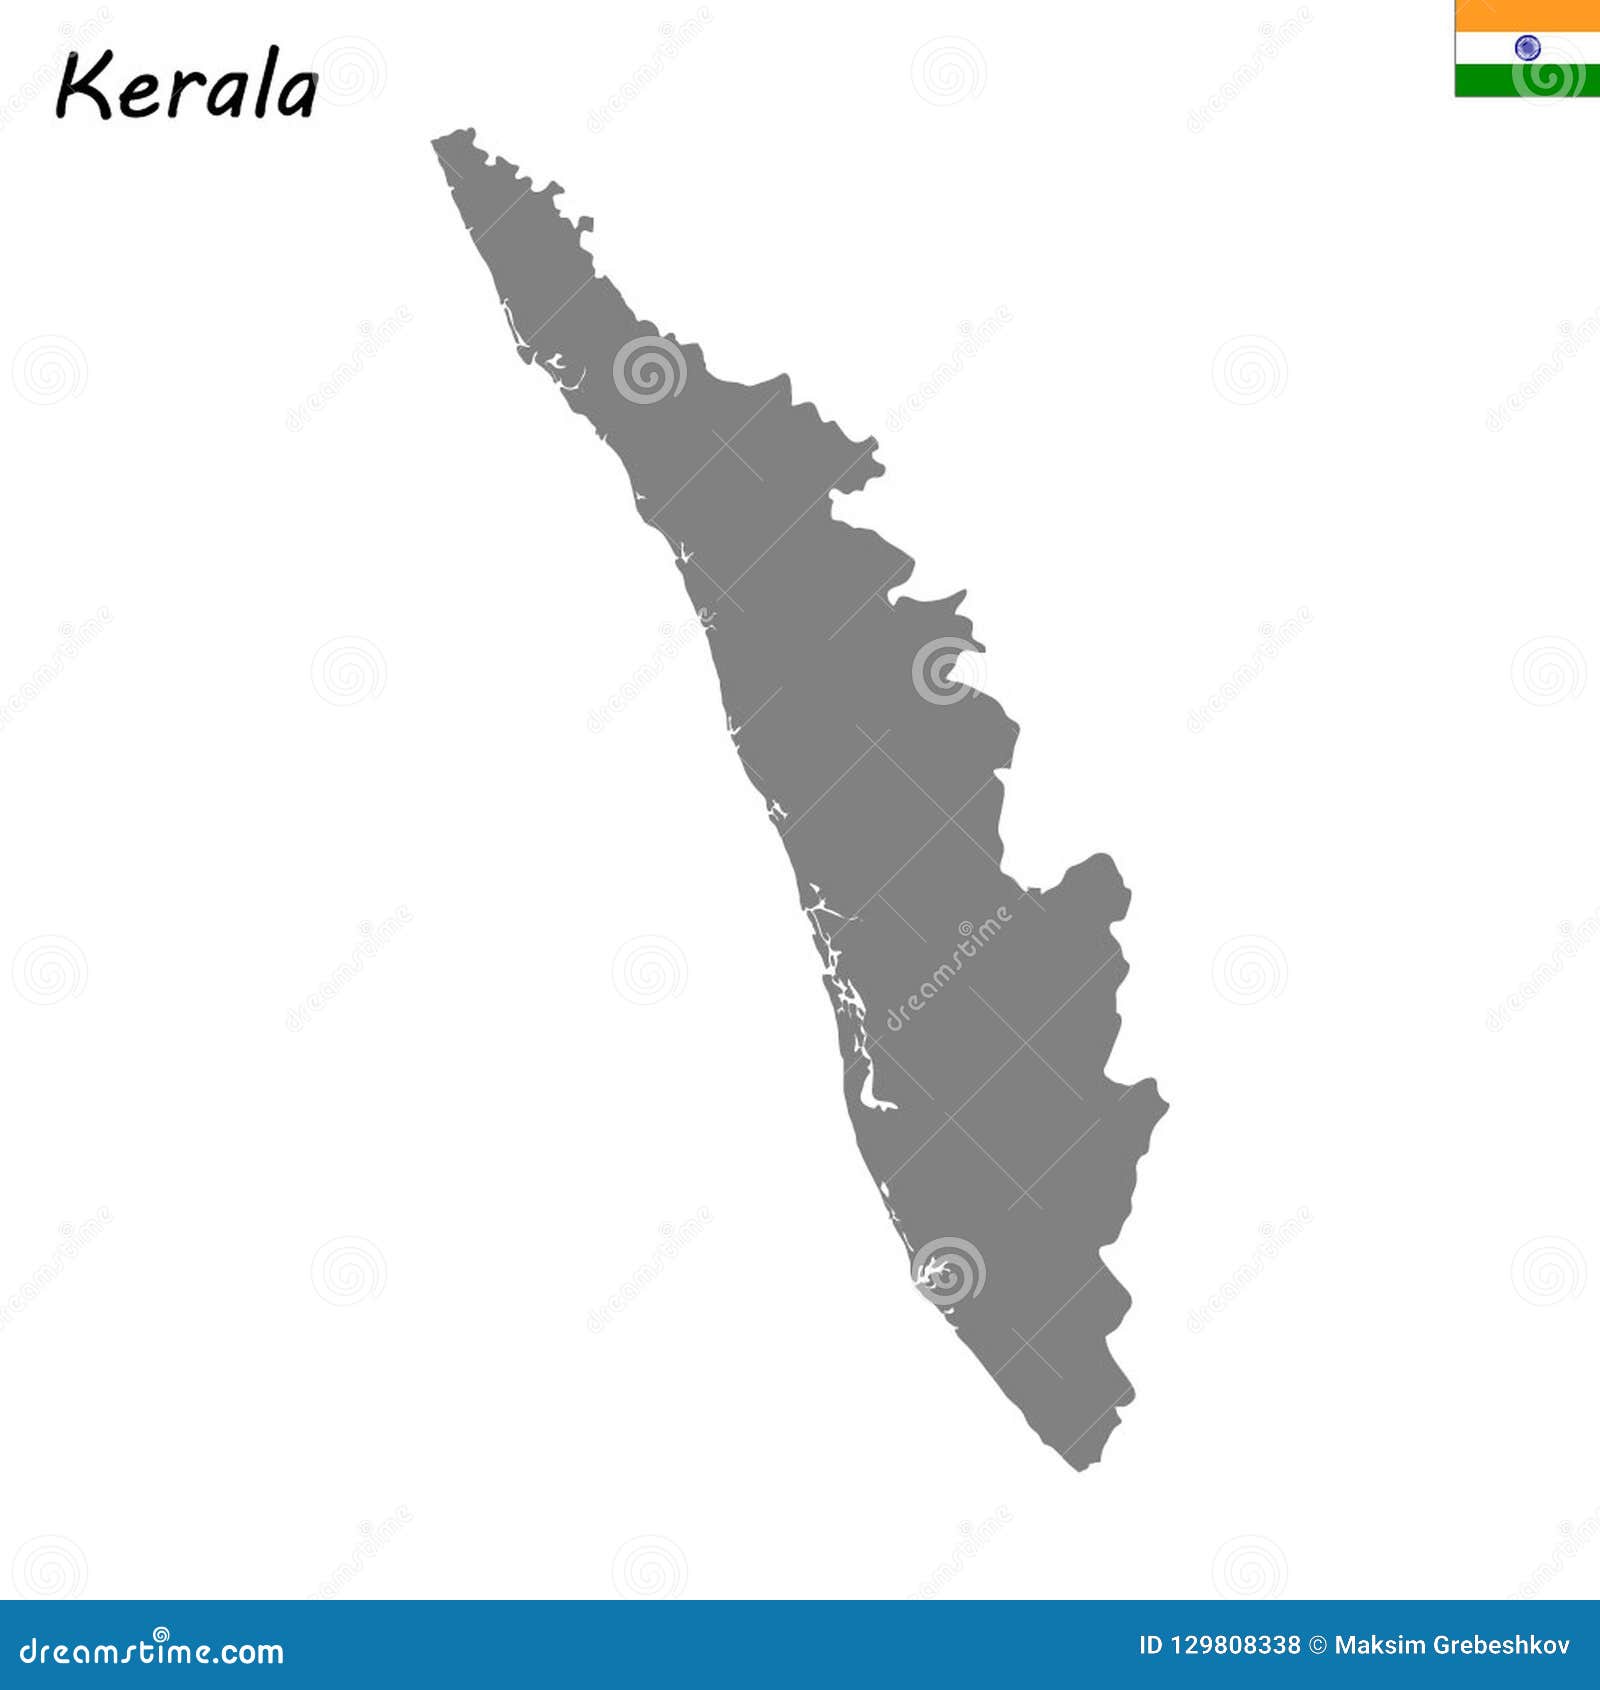 Detailed Map Of Kerala Vector Illustration | CartoonDealer.com #9337210